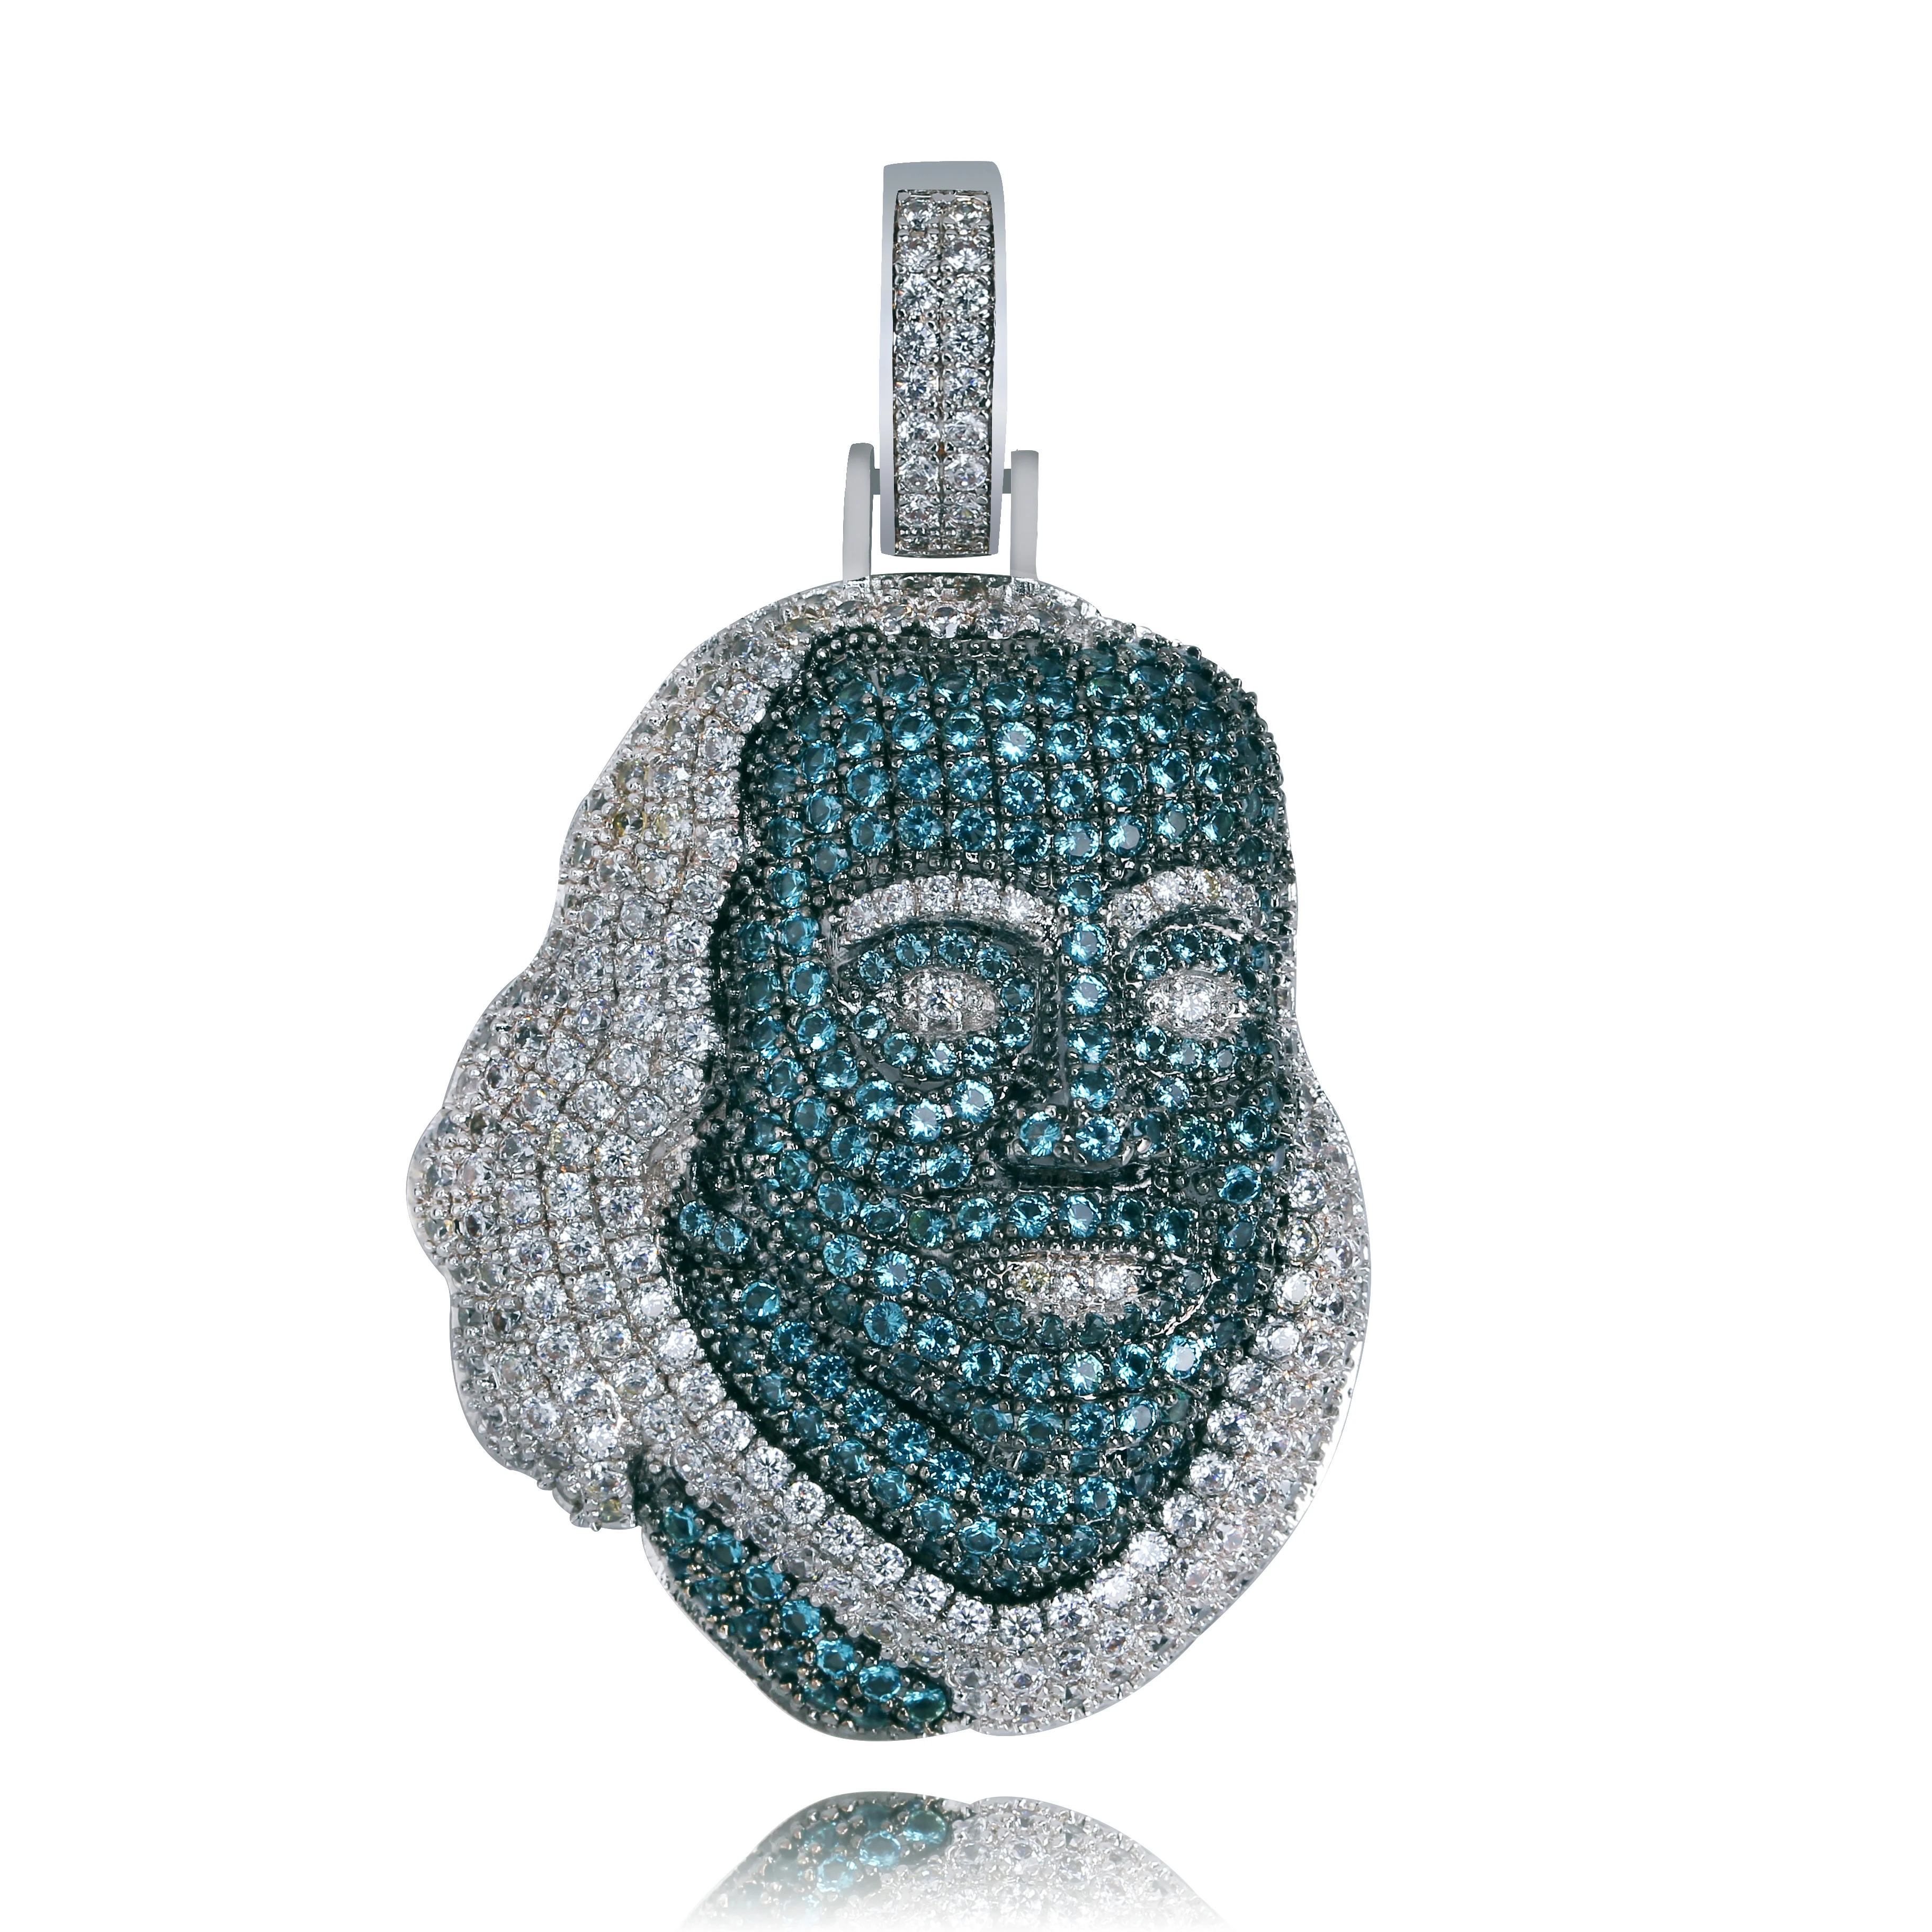 TOPGRILLZ ICEDOUT Blueface بنيامين قطعة قلادة مع تنس سلسلة بلينغ الهيب هوب مجوهرات ثقافة الشارع